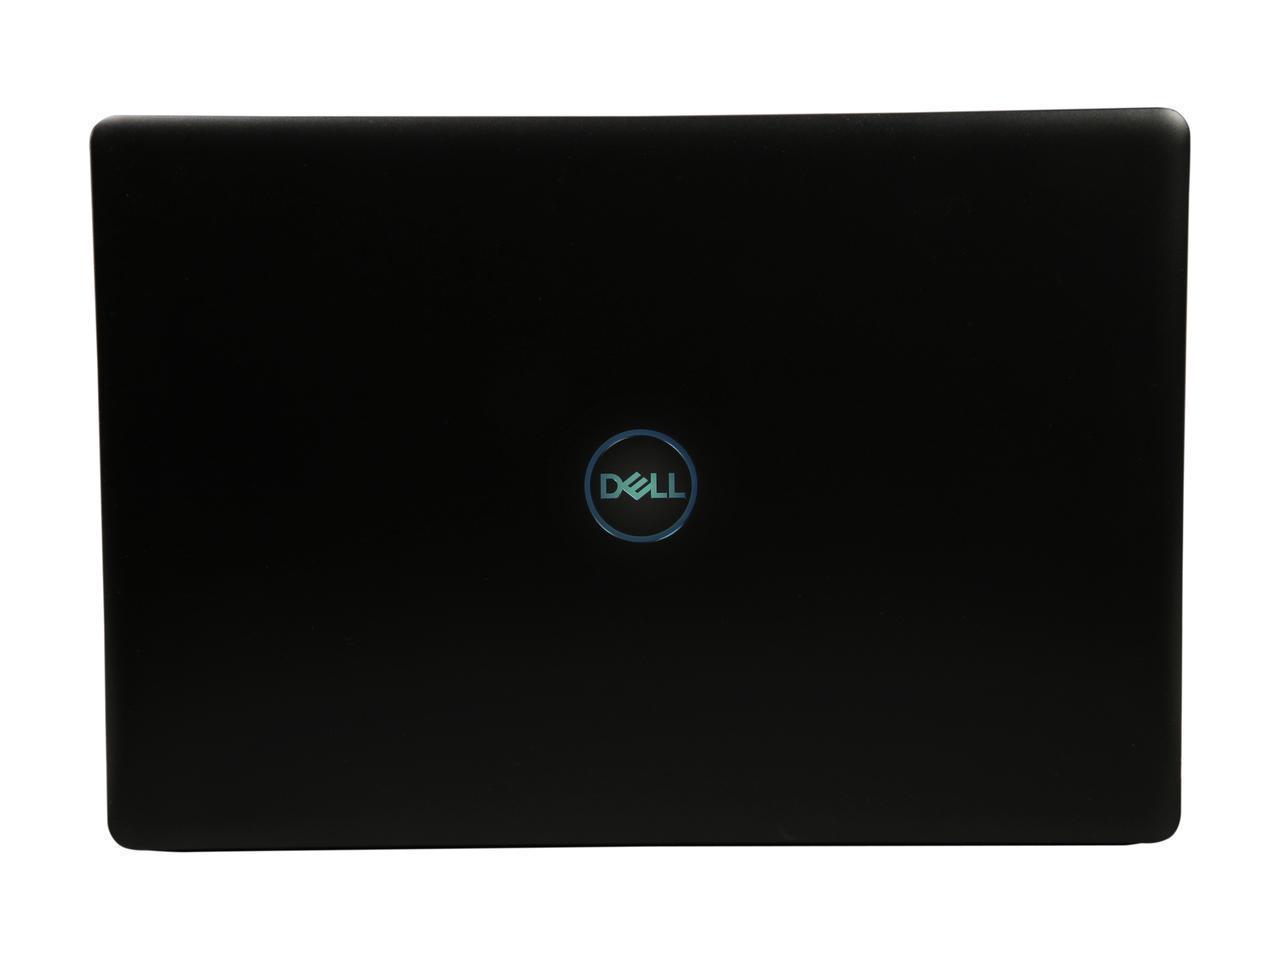 2019 Newest Dell 15.6" FHD IPS High-Performance Gaming Laptop | Intel Core i5-8300H Quad-Core | 8GB+1TB HDD | GeForce GTX 1050 Ti 4GB | Backlit Keyboard | Windows 10